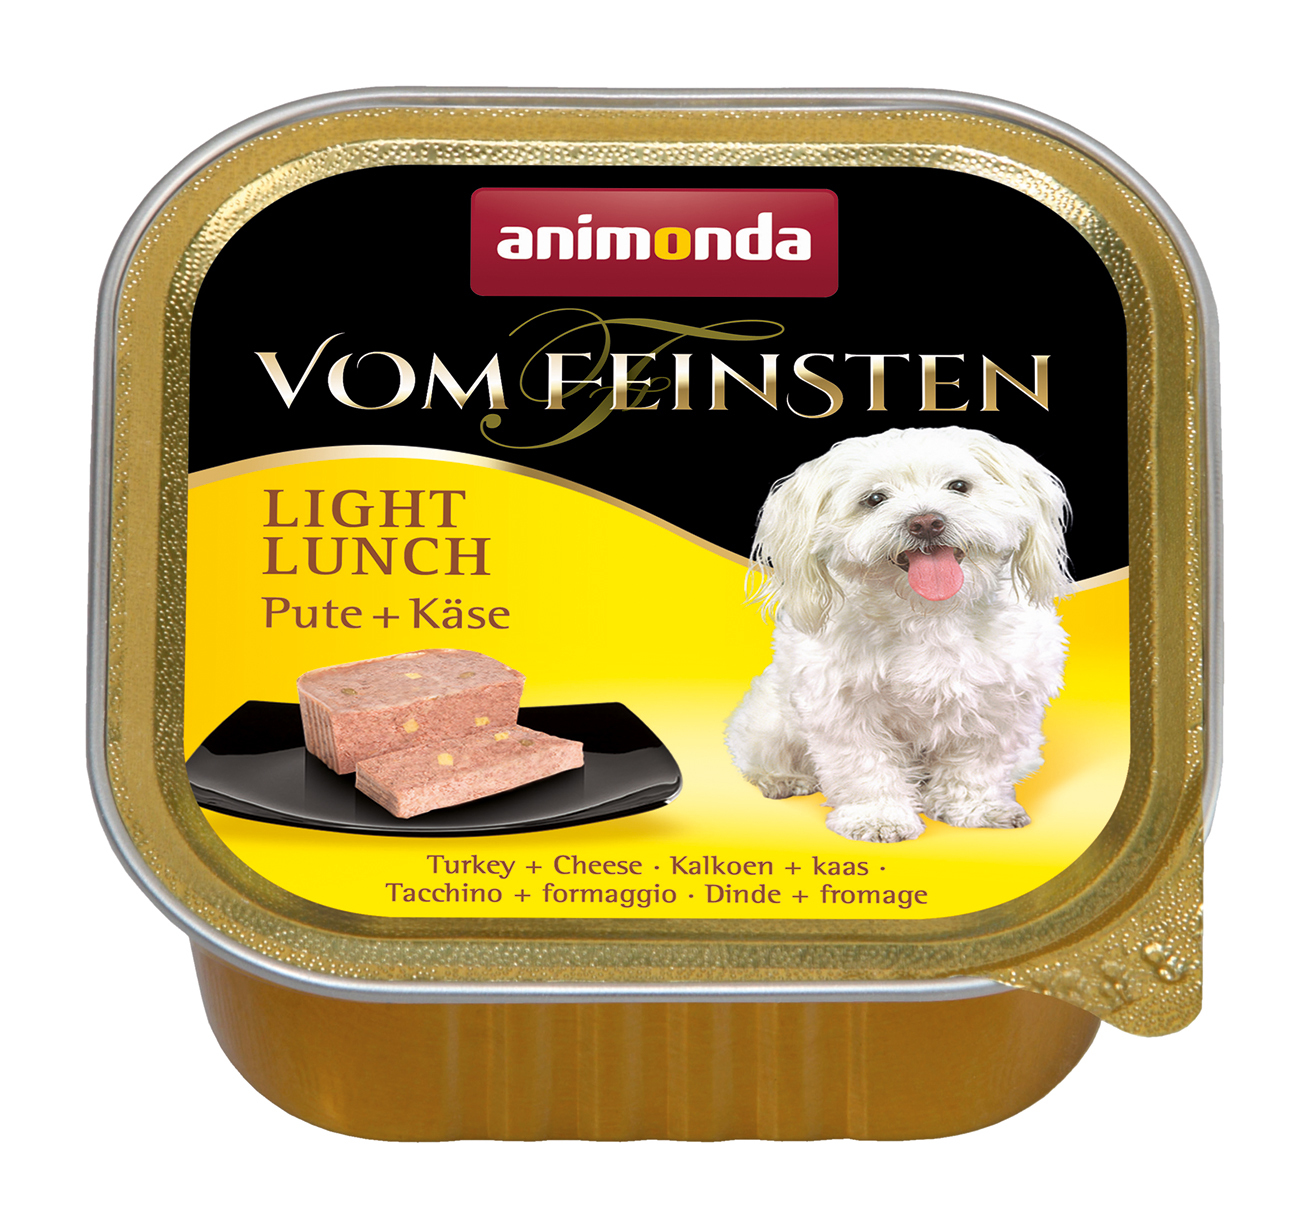 Animonda Vom Feinsten Light Lunch 22x150g Pute & Käse